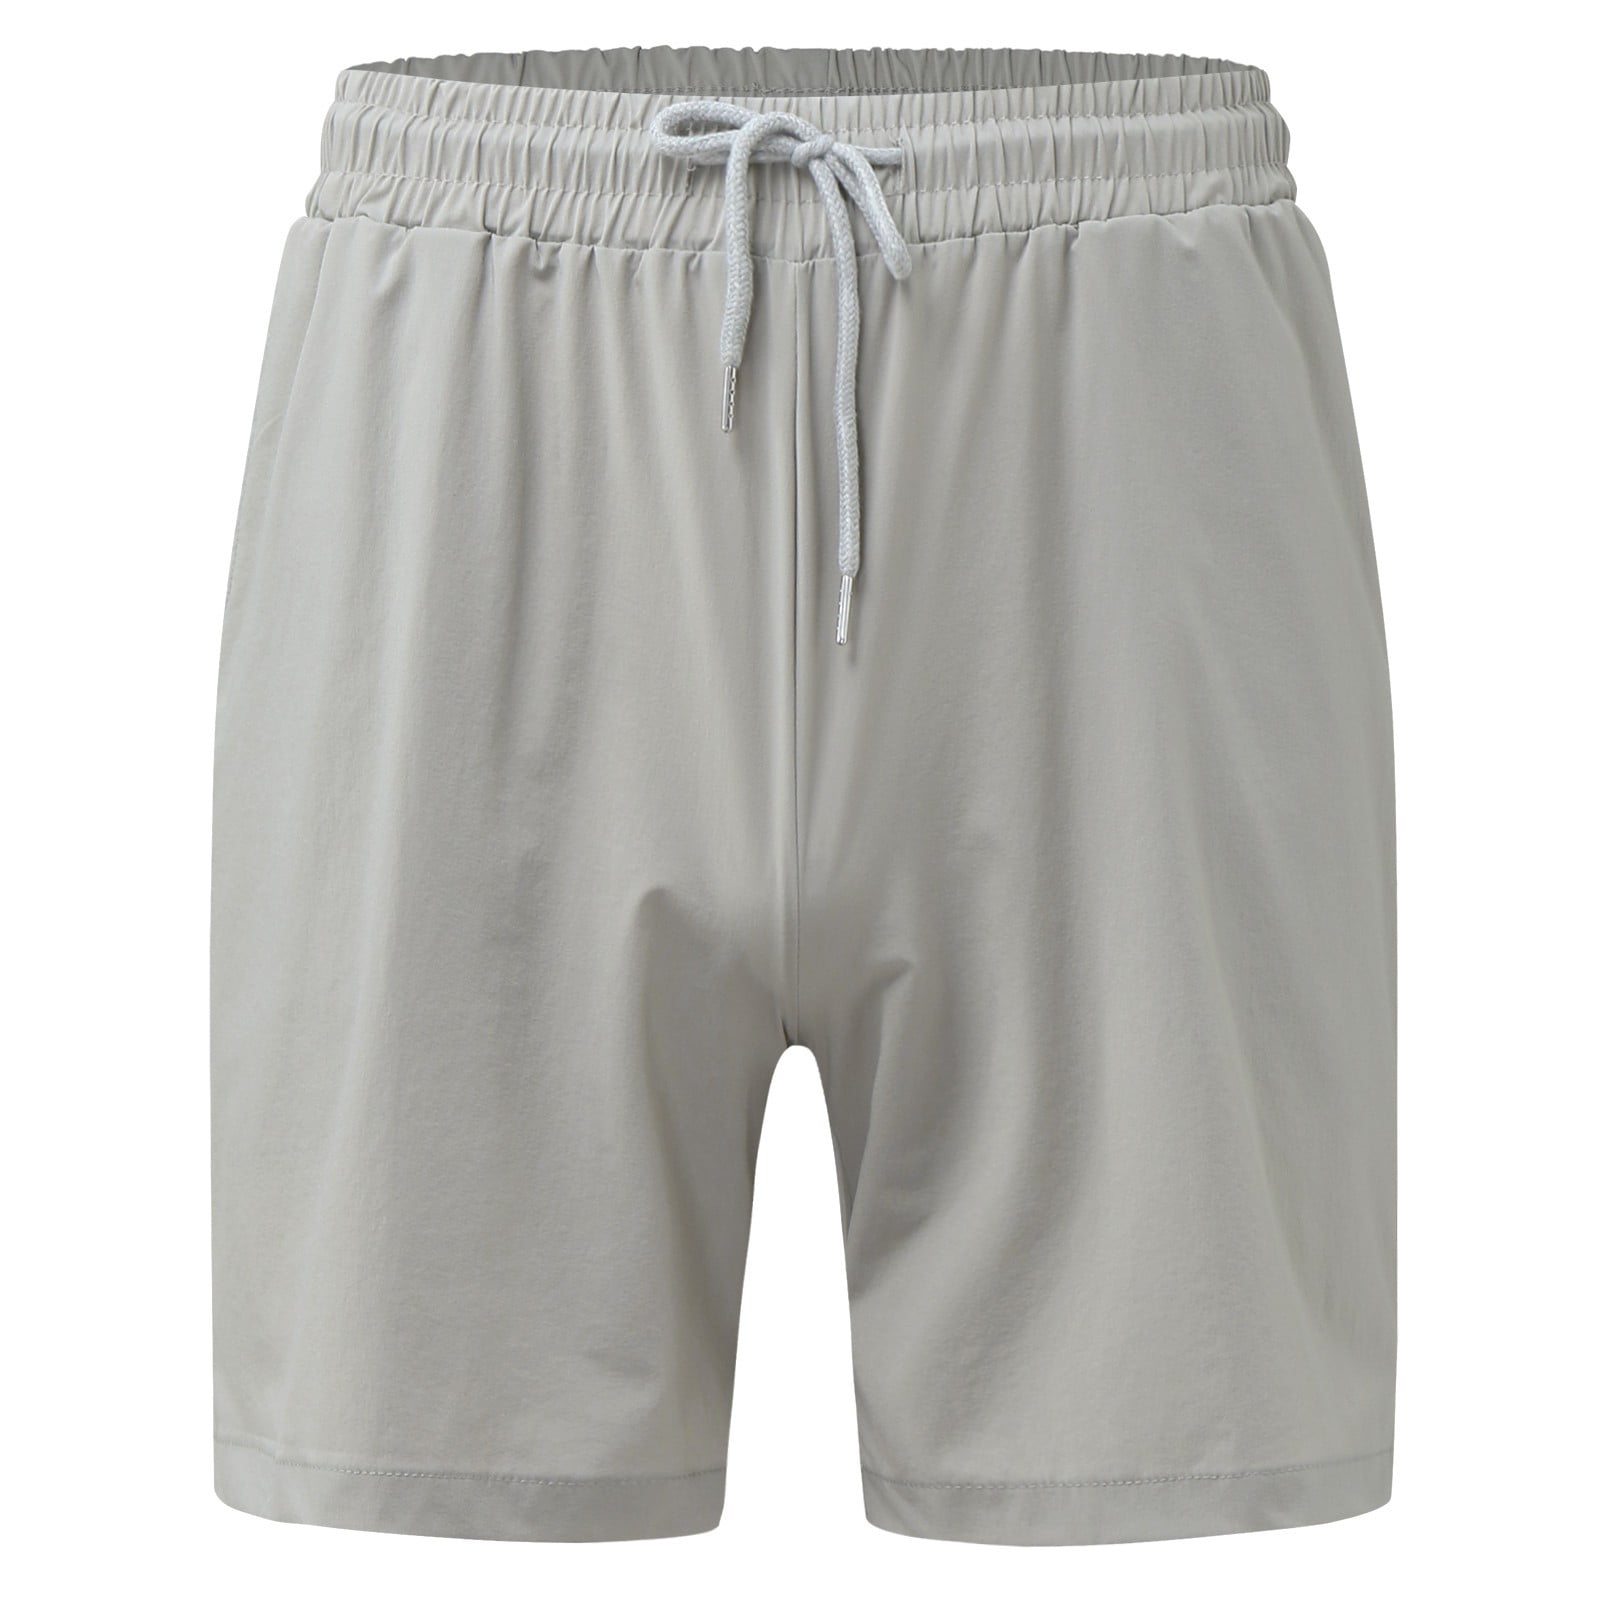 AdBFJAF Mens Pants Casual Men's Casual Thin Summer Yoga Beach Trousers ...